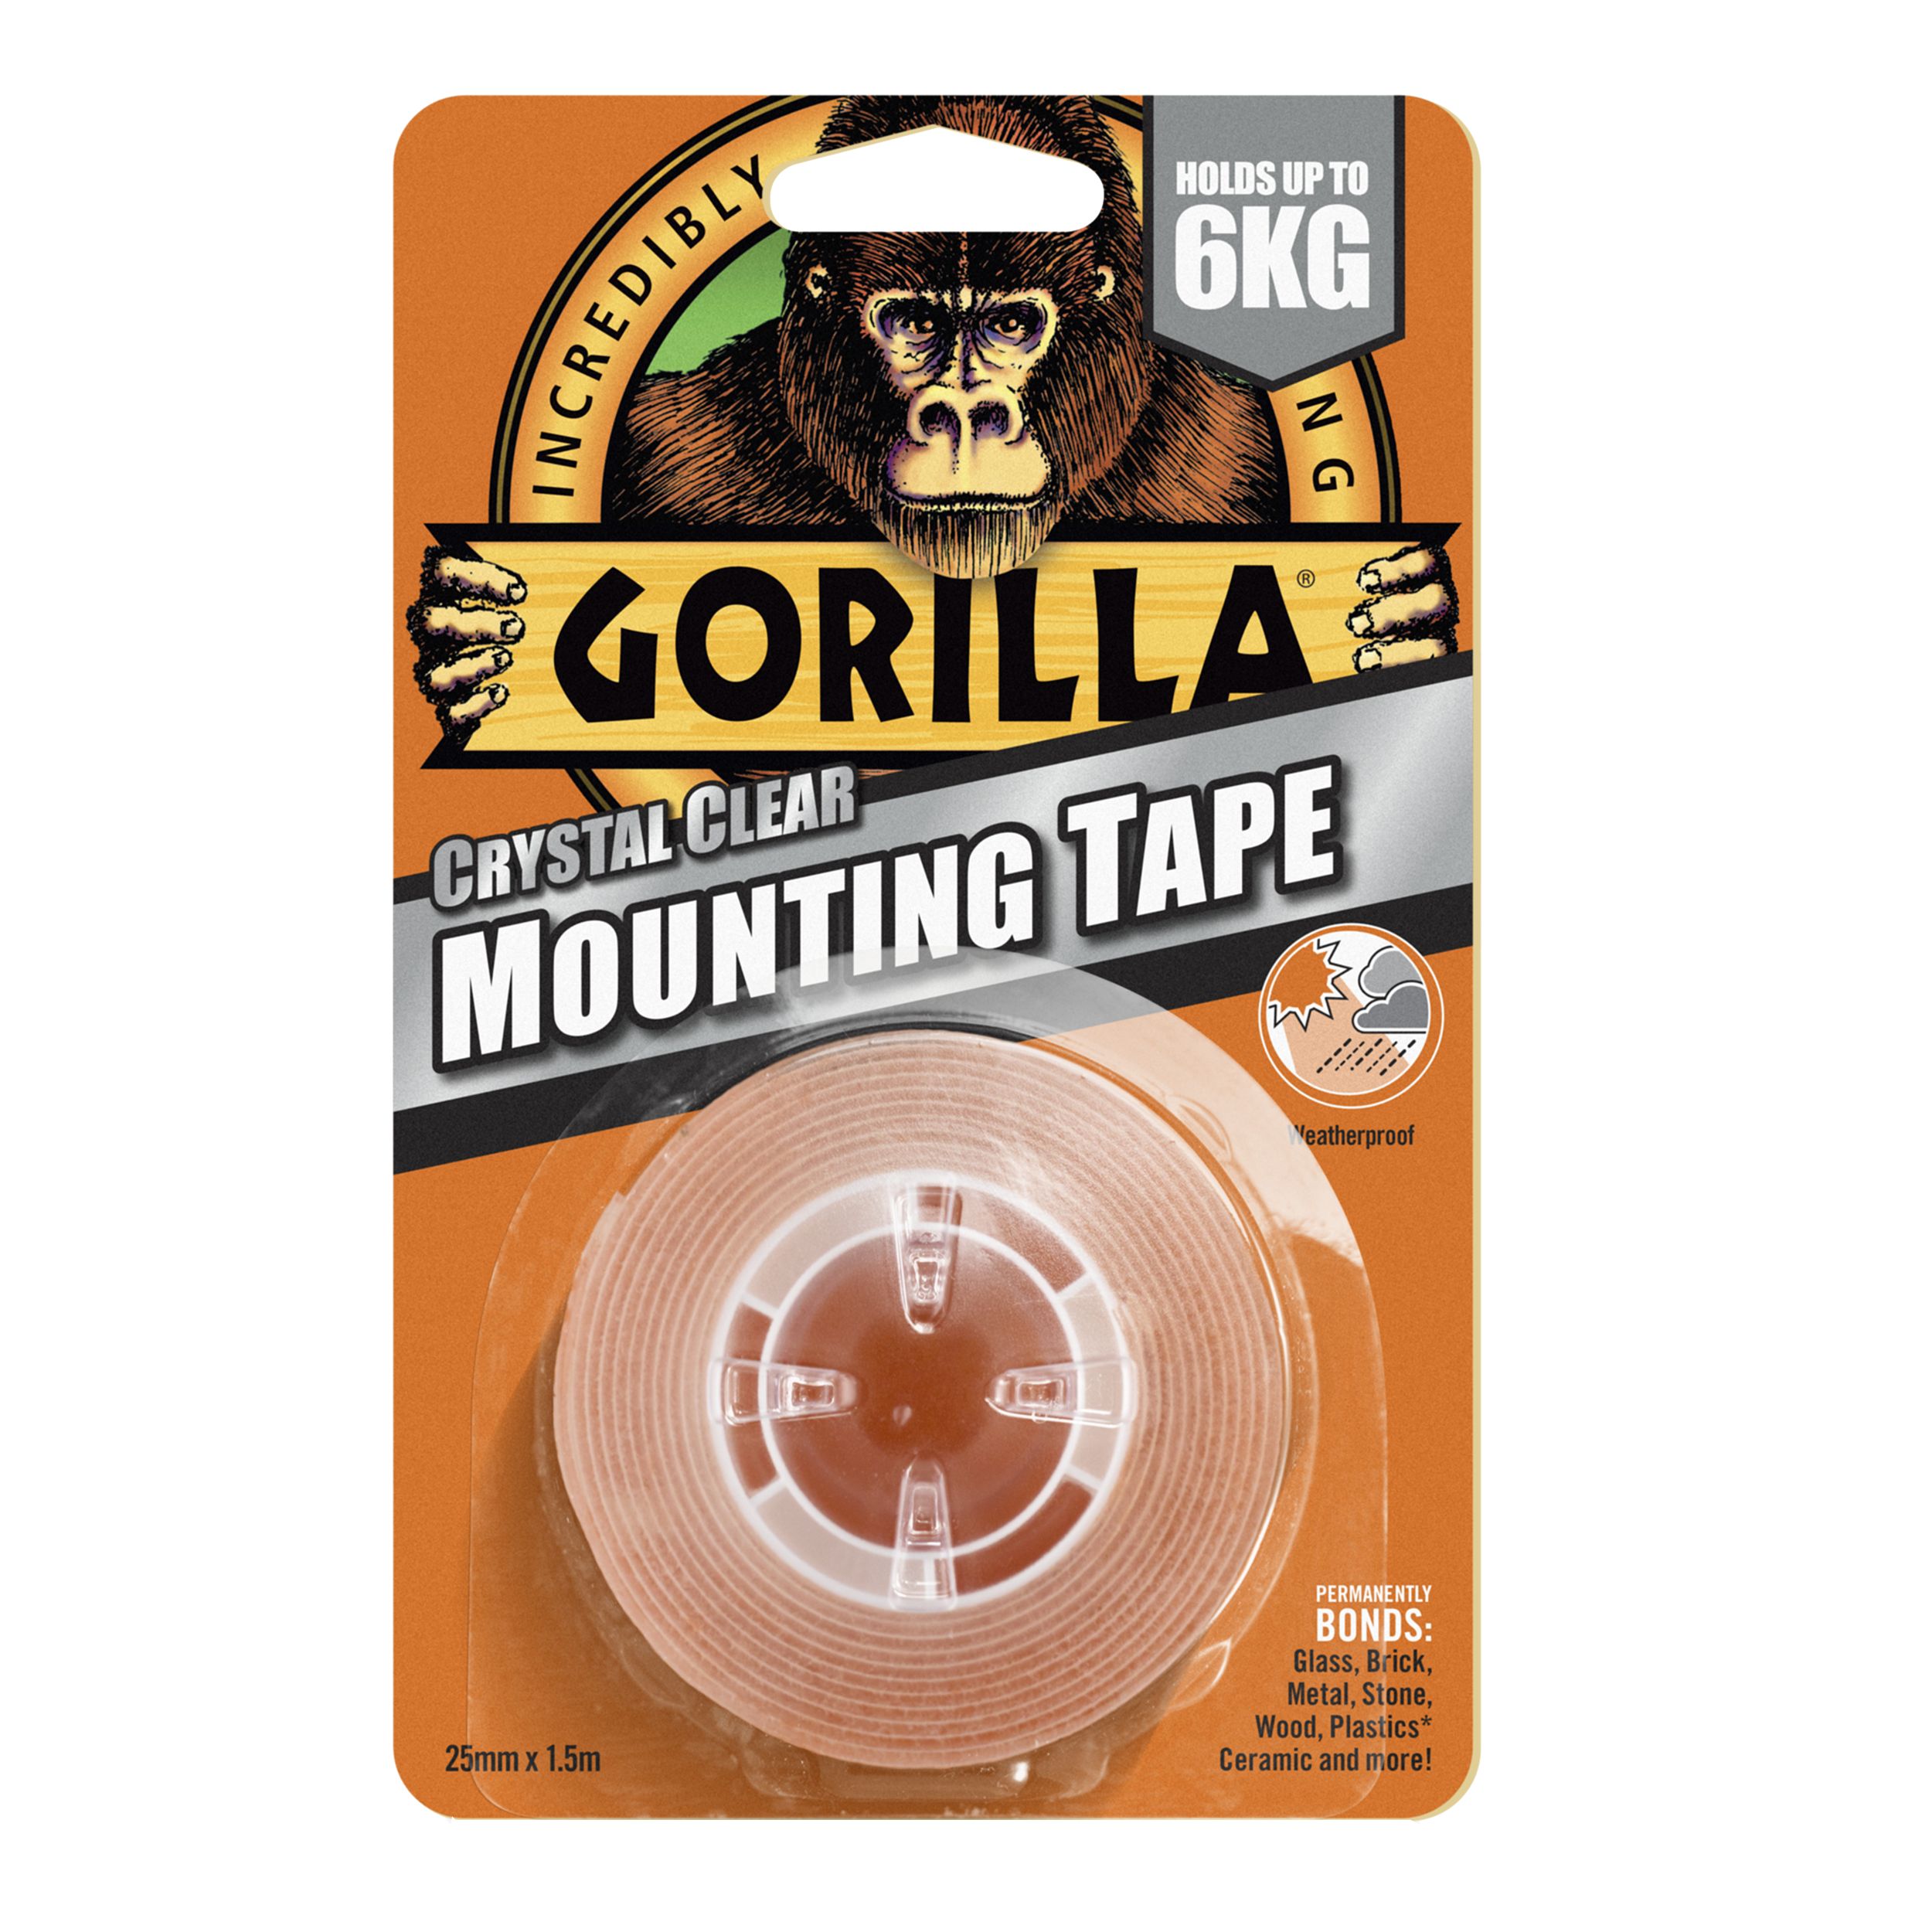 The Gorilla Glue Company - White Gorilla Tape is made with double